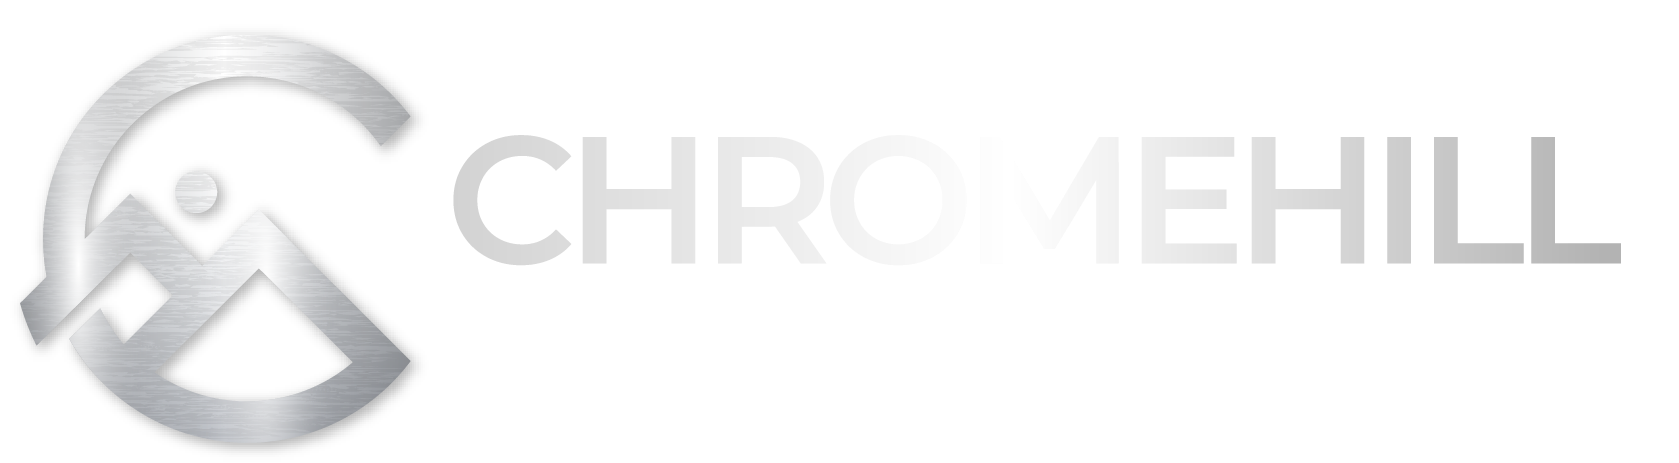 chrome hill large company logo